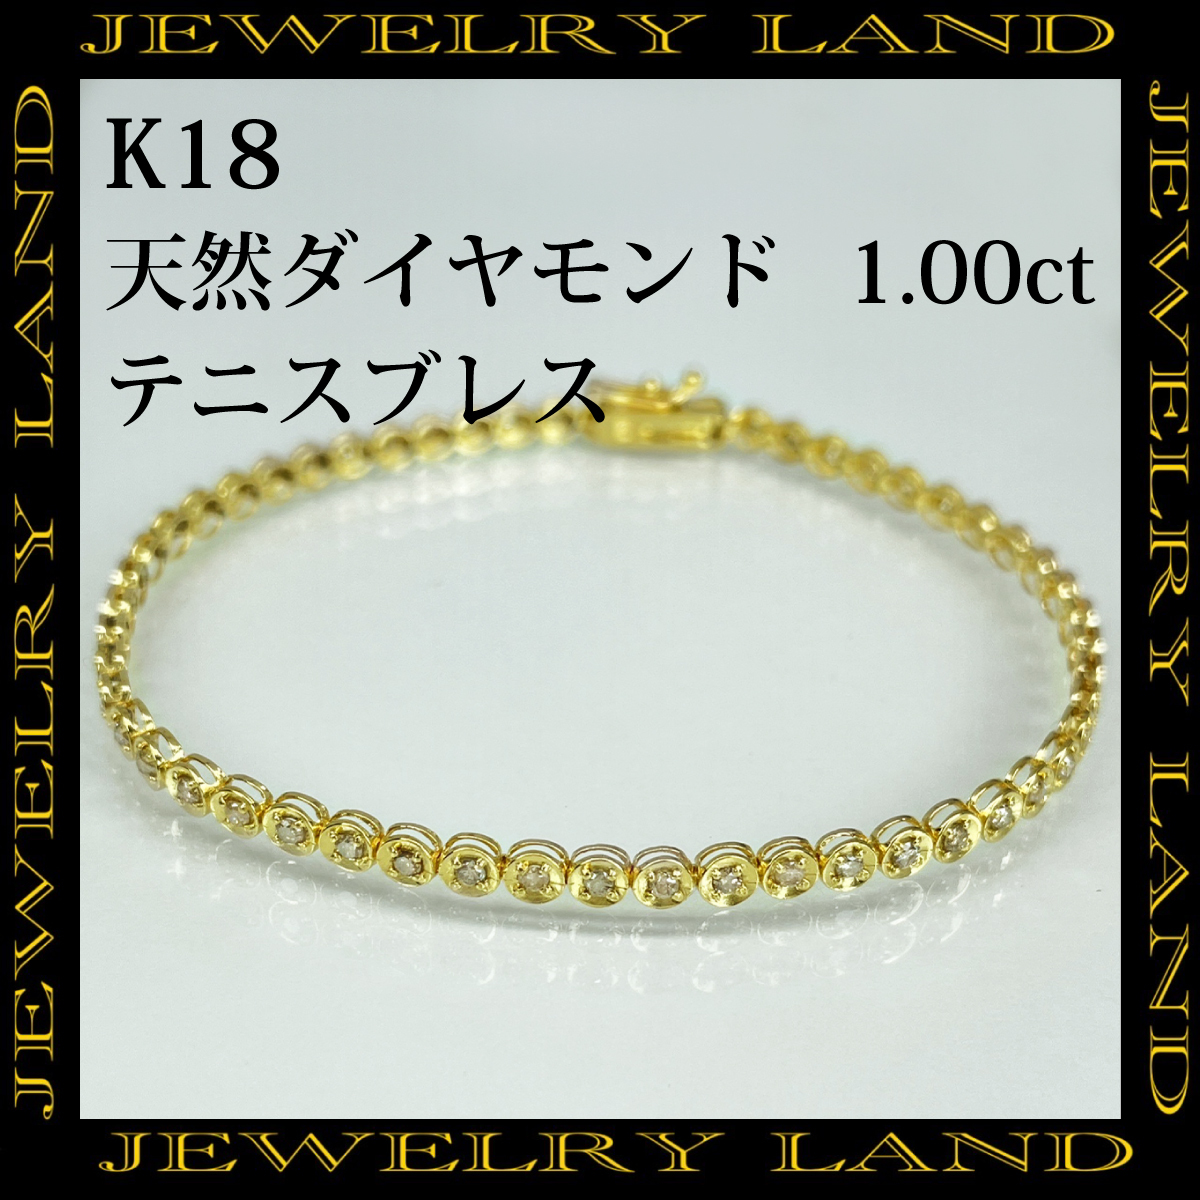 K18 天然 ダイヤモンド 1.00ct テニスブレス_画像1